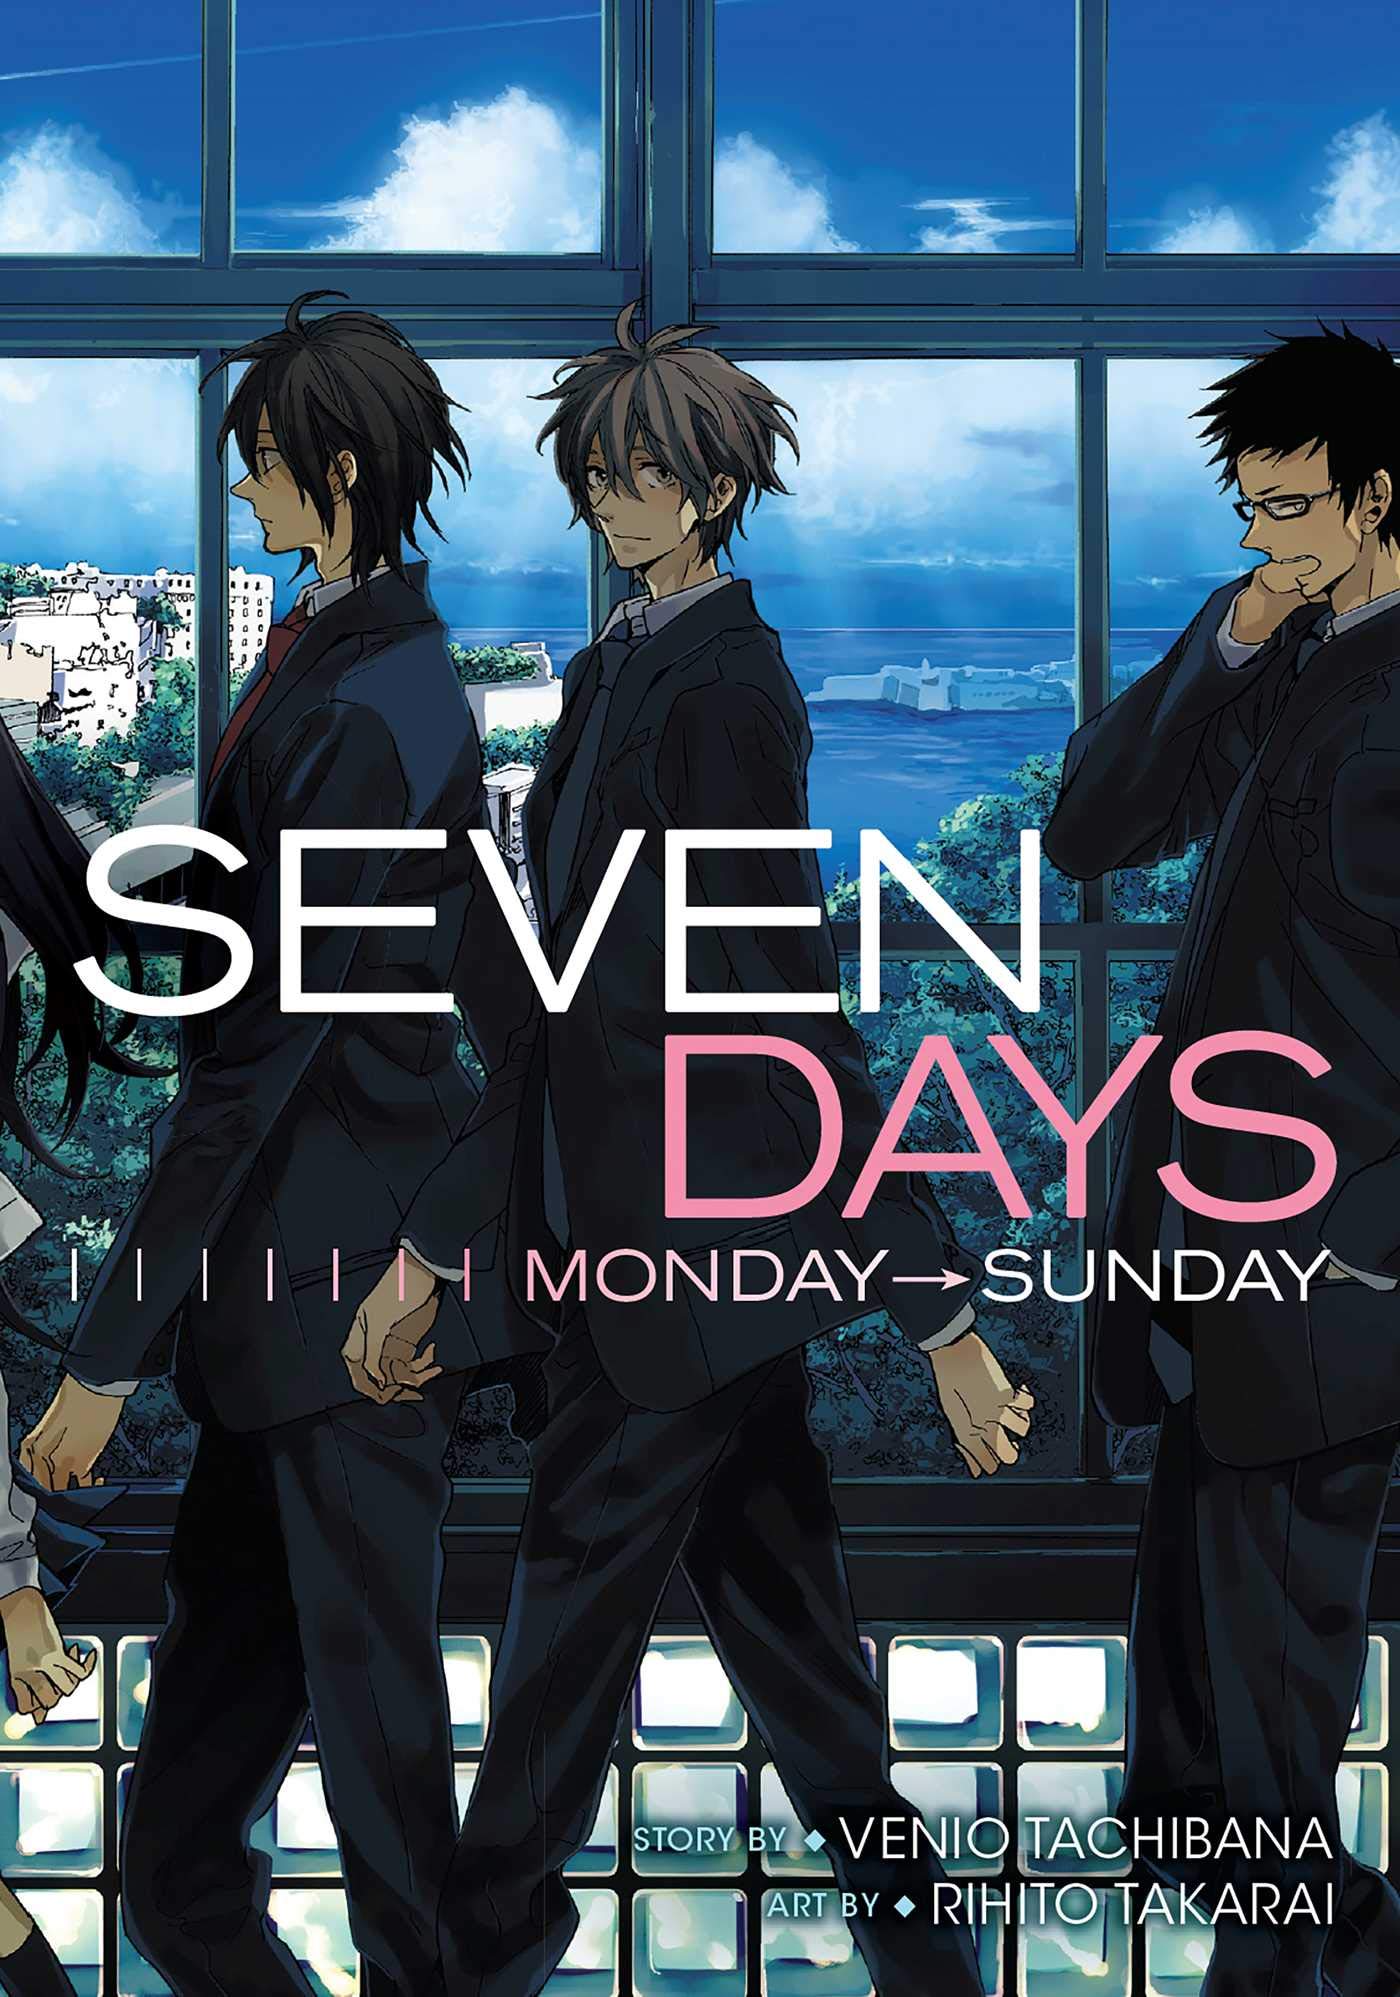 Days (TV) PV Anime Trailer | Anime Tv Channel - YouTube